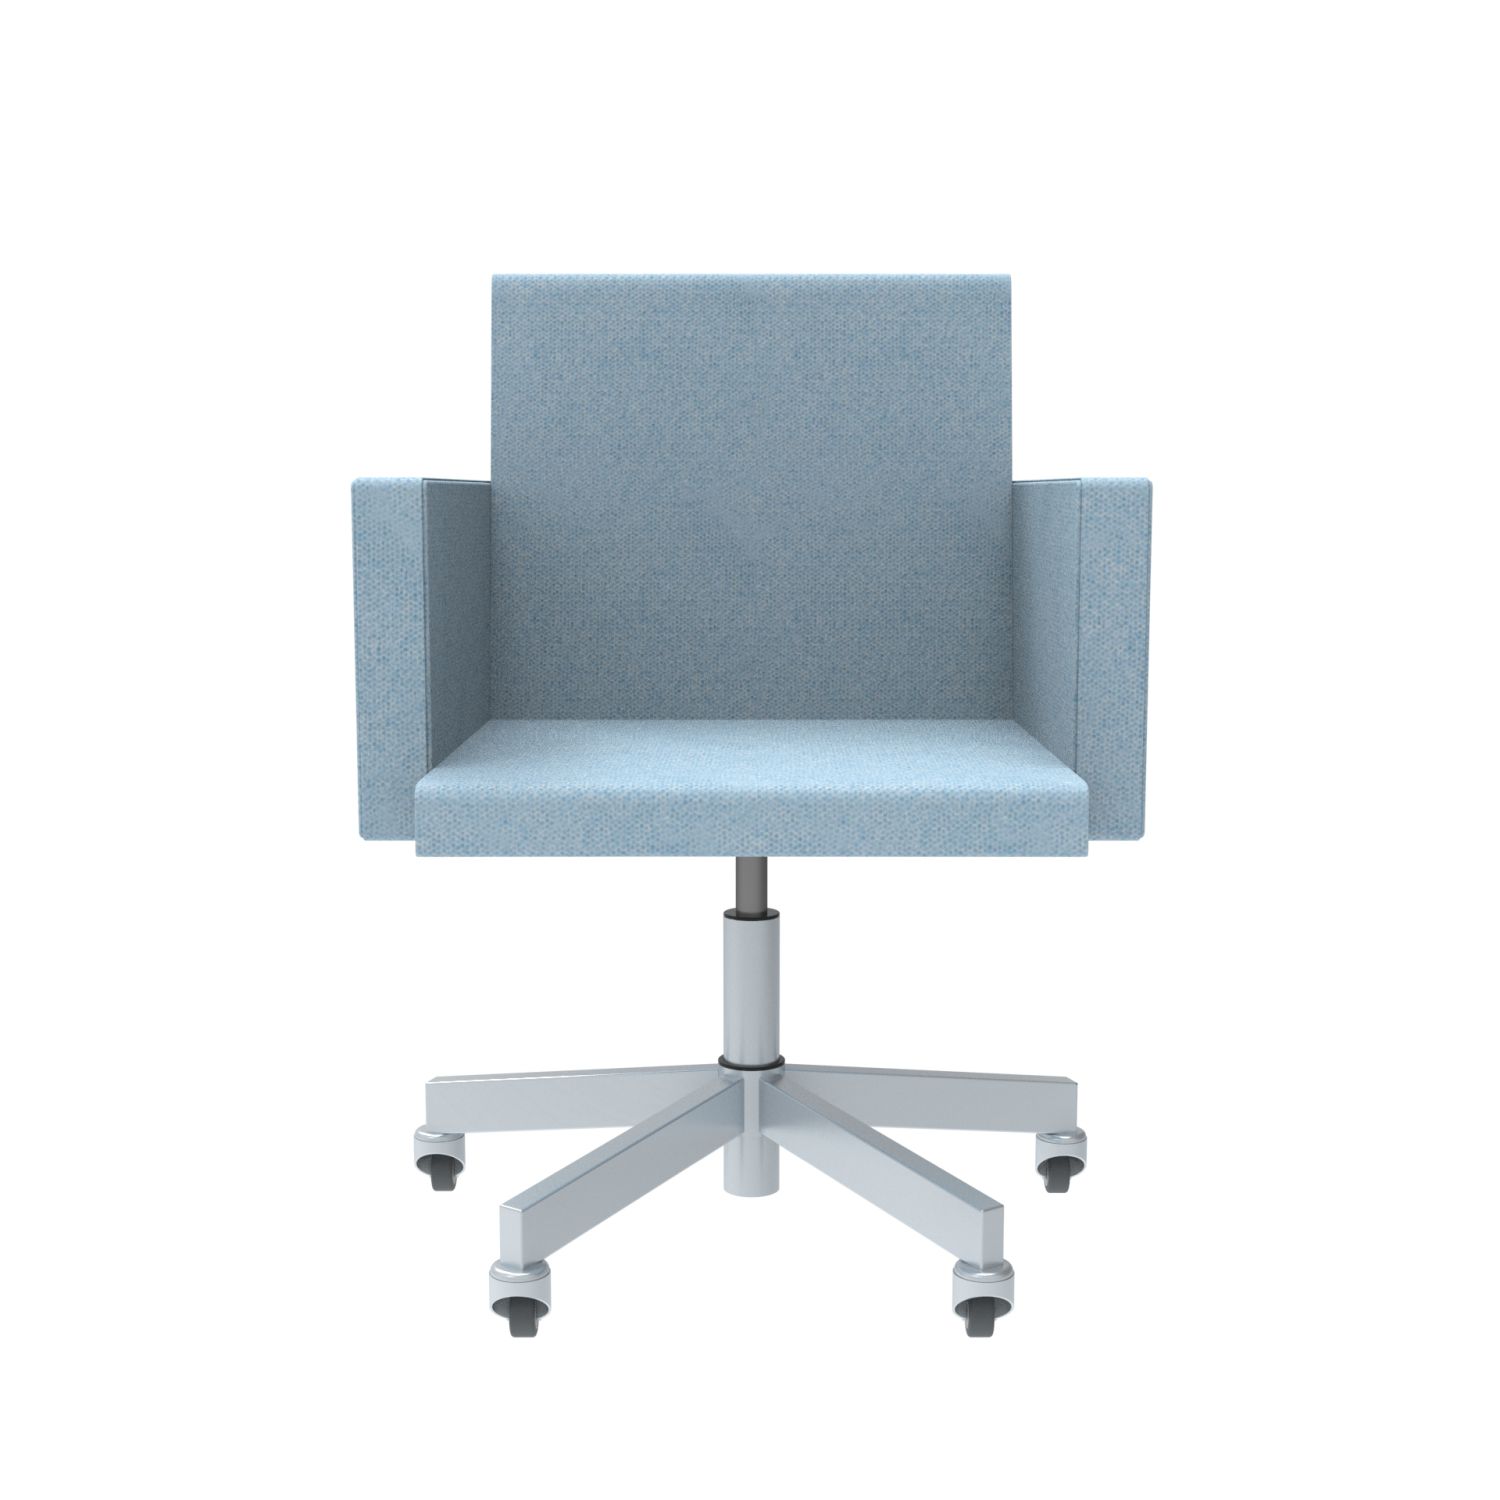 lensvelt atelier van lieshout office chair with armrests moss pastel blue 40 galvanized soft rolls